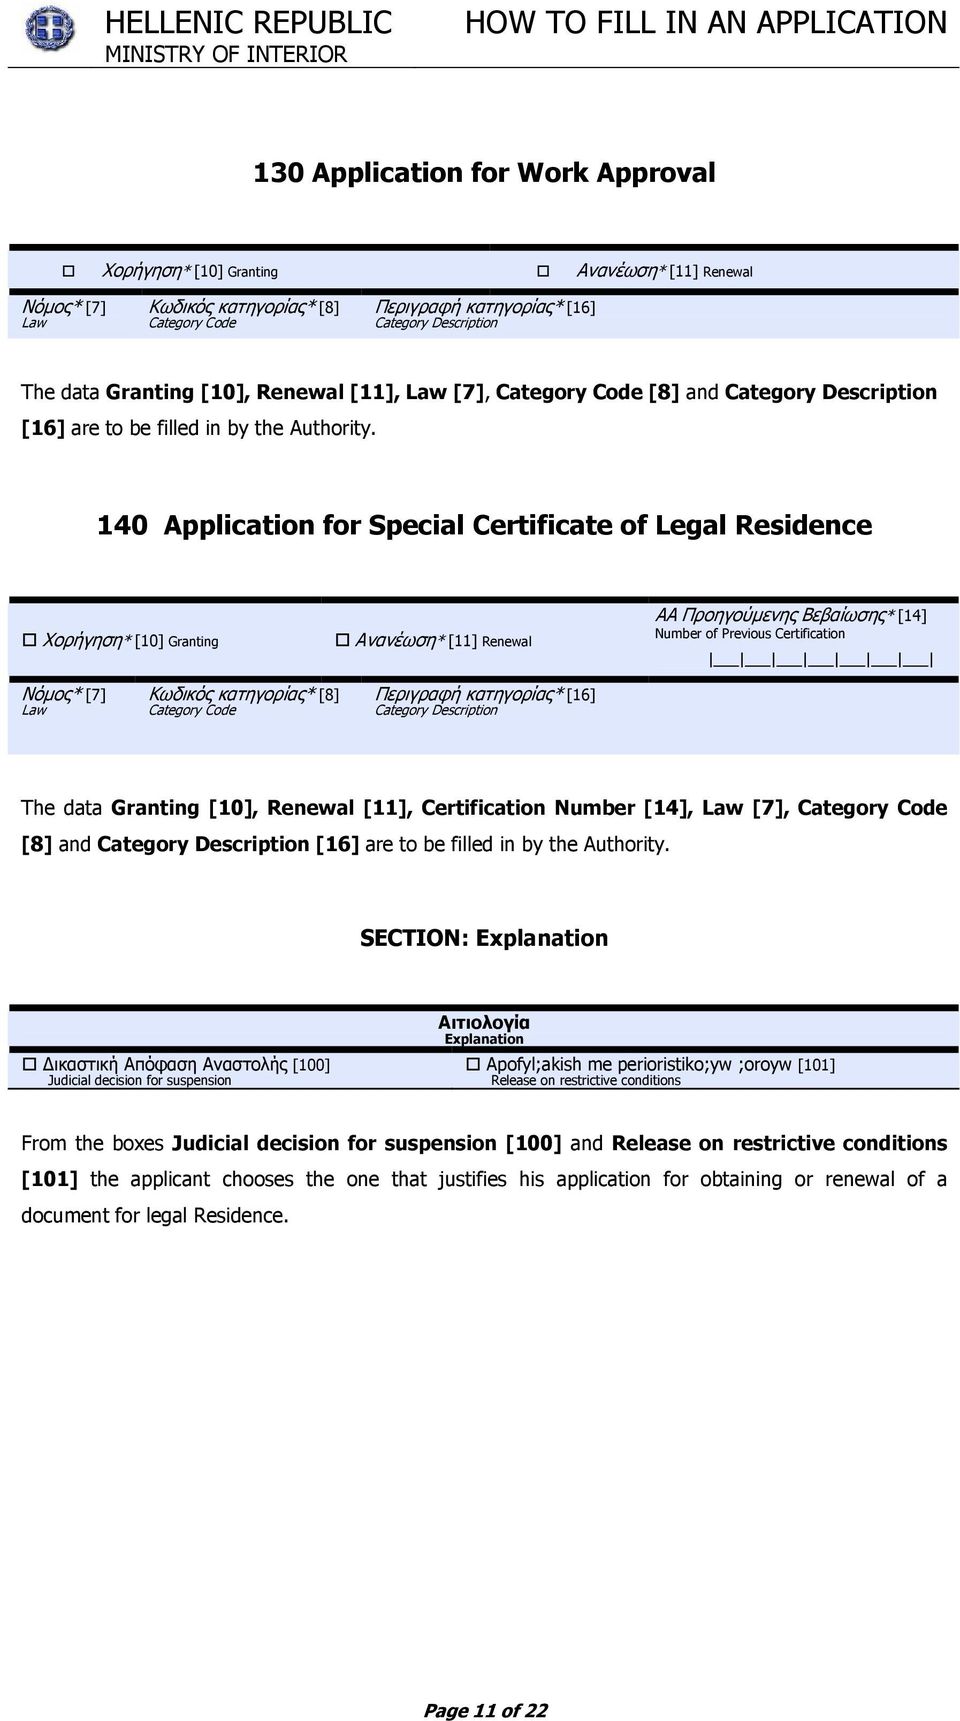 140 Application for Special Certificate of Legal Residence Χορήγηση* [10] Granting Ανανέωση* [11] Renewal ΑΑ Προηγούµενης Βεβαίωσης* [14] Number of Previous Certification Νόµος* [7] Law Κωδικός